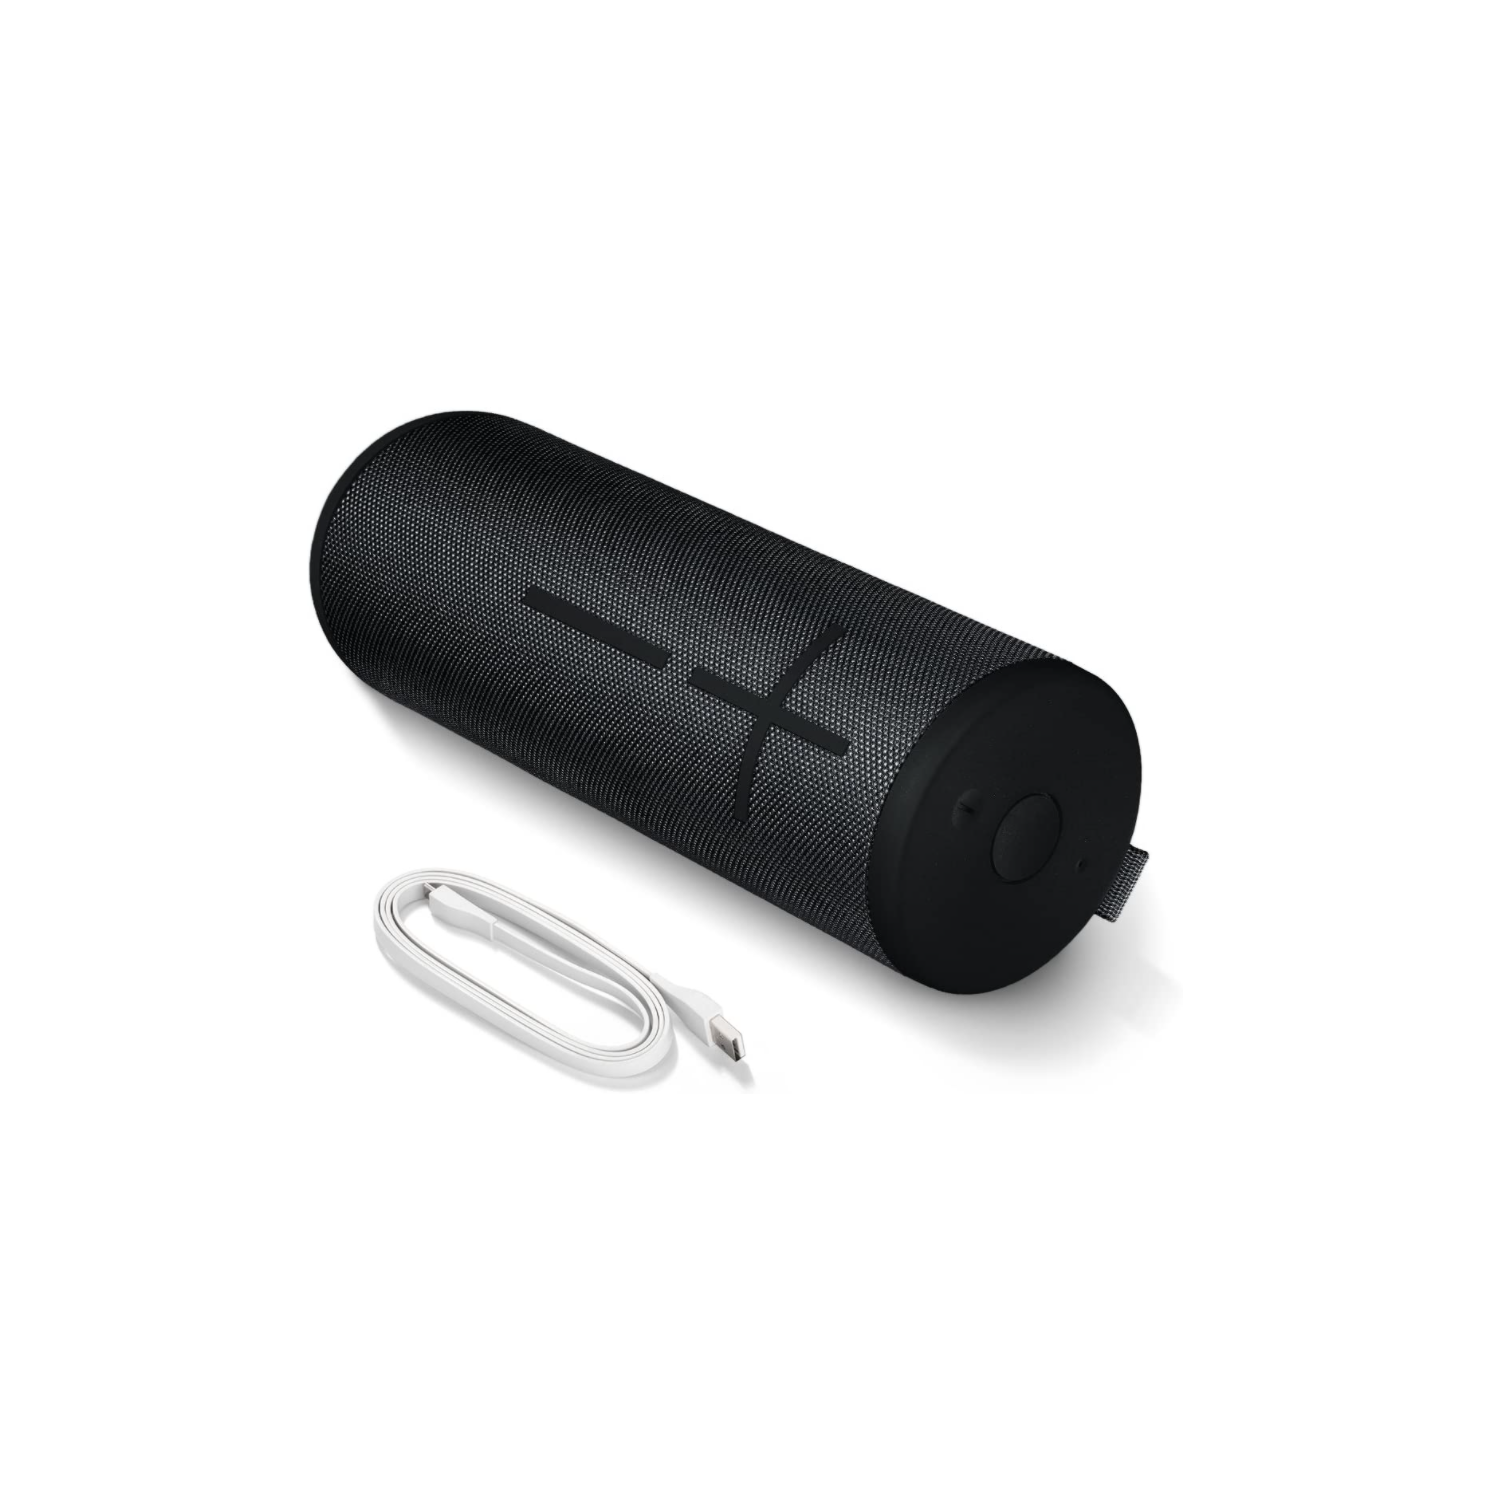 Ultimate Ears BOOM 3 Portable Wireless Bluetooth Speaker with  Waterproof/Dustproof Design Night Black 984-001348 - Best Buy